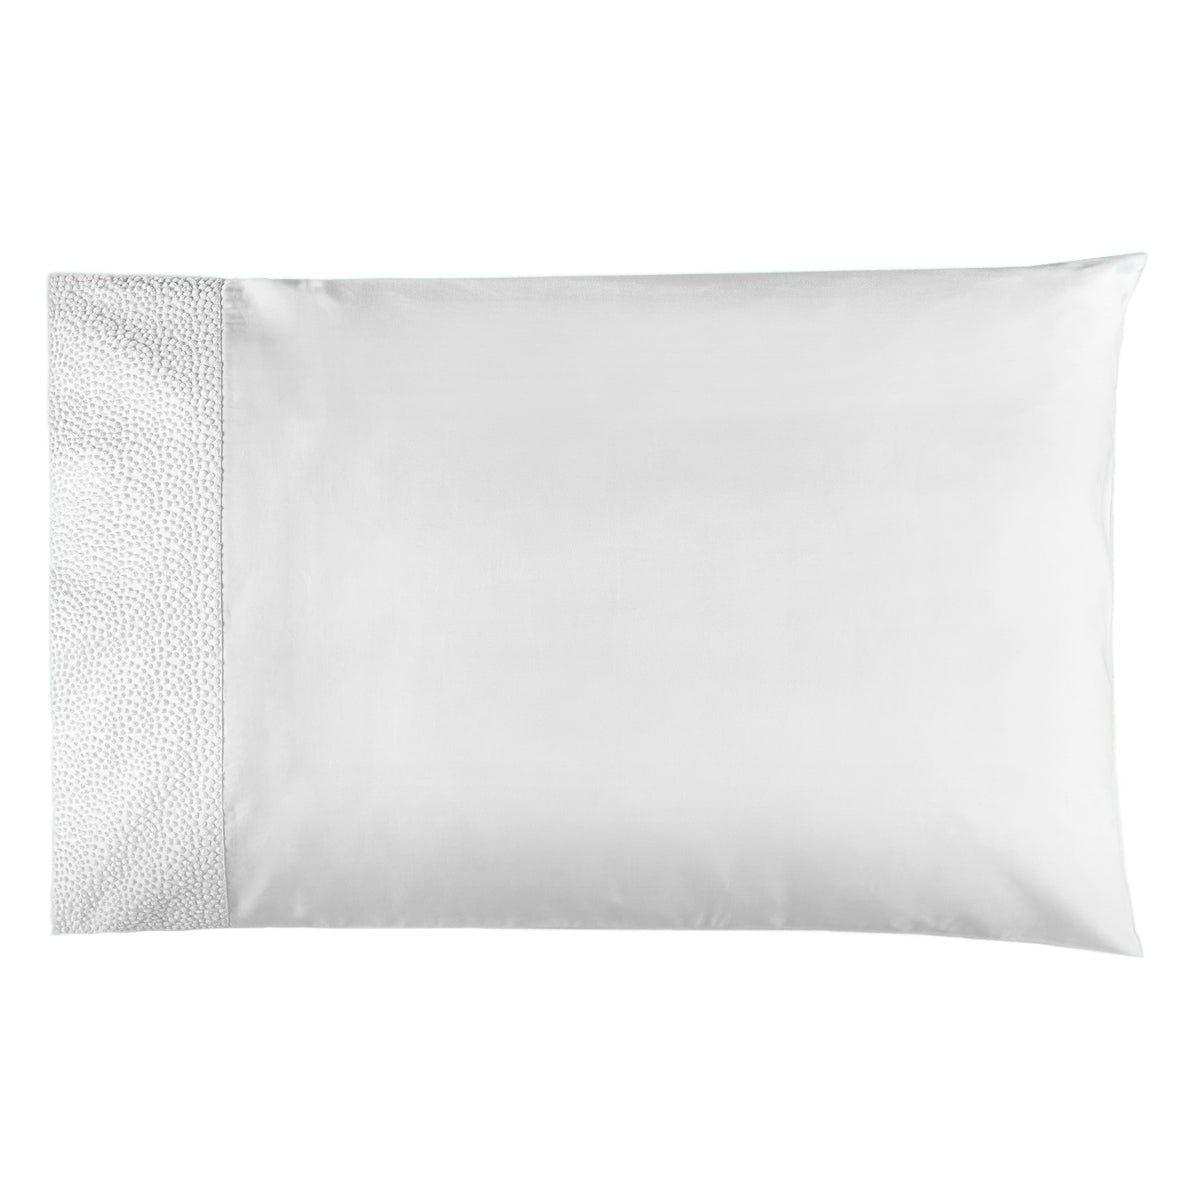 BOVI Pearls Bedding Pillowcase White Fine Linens